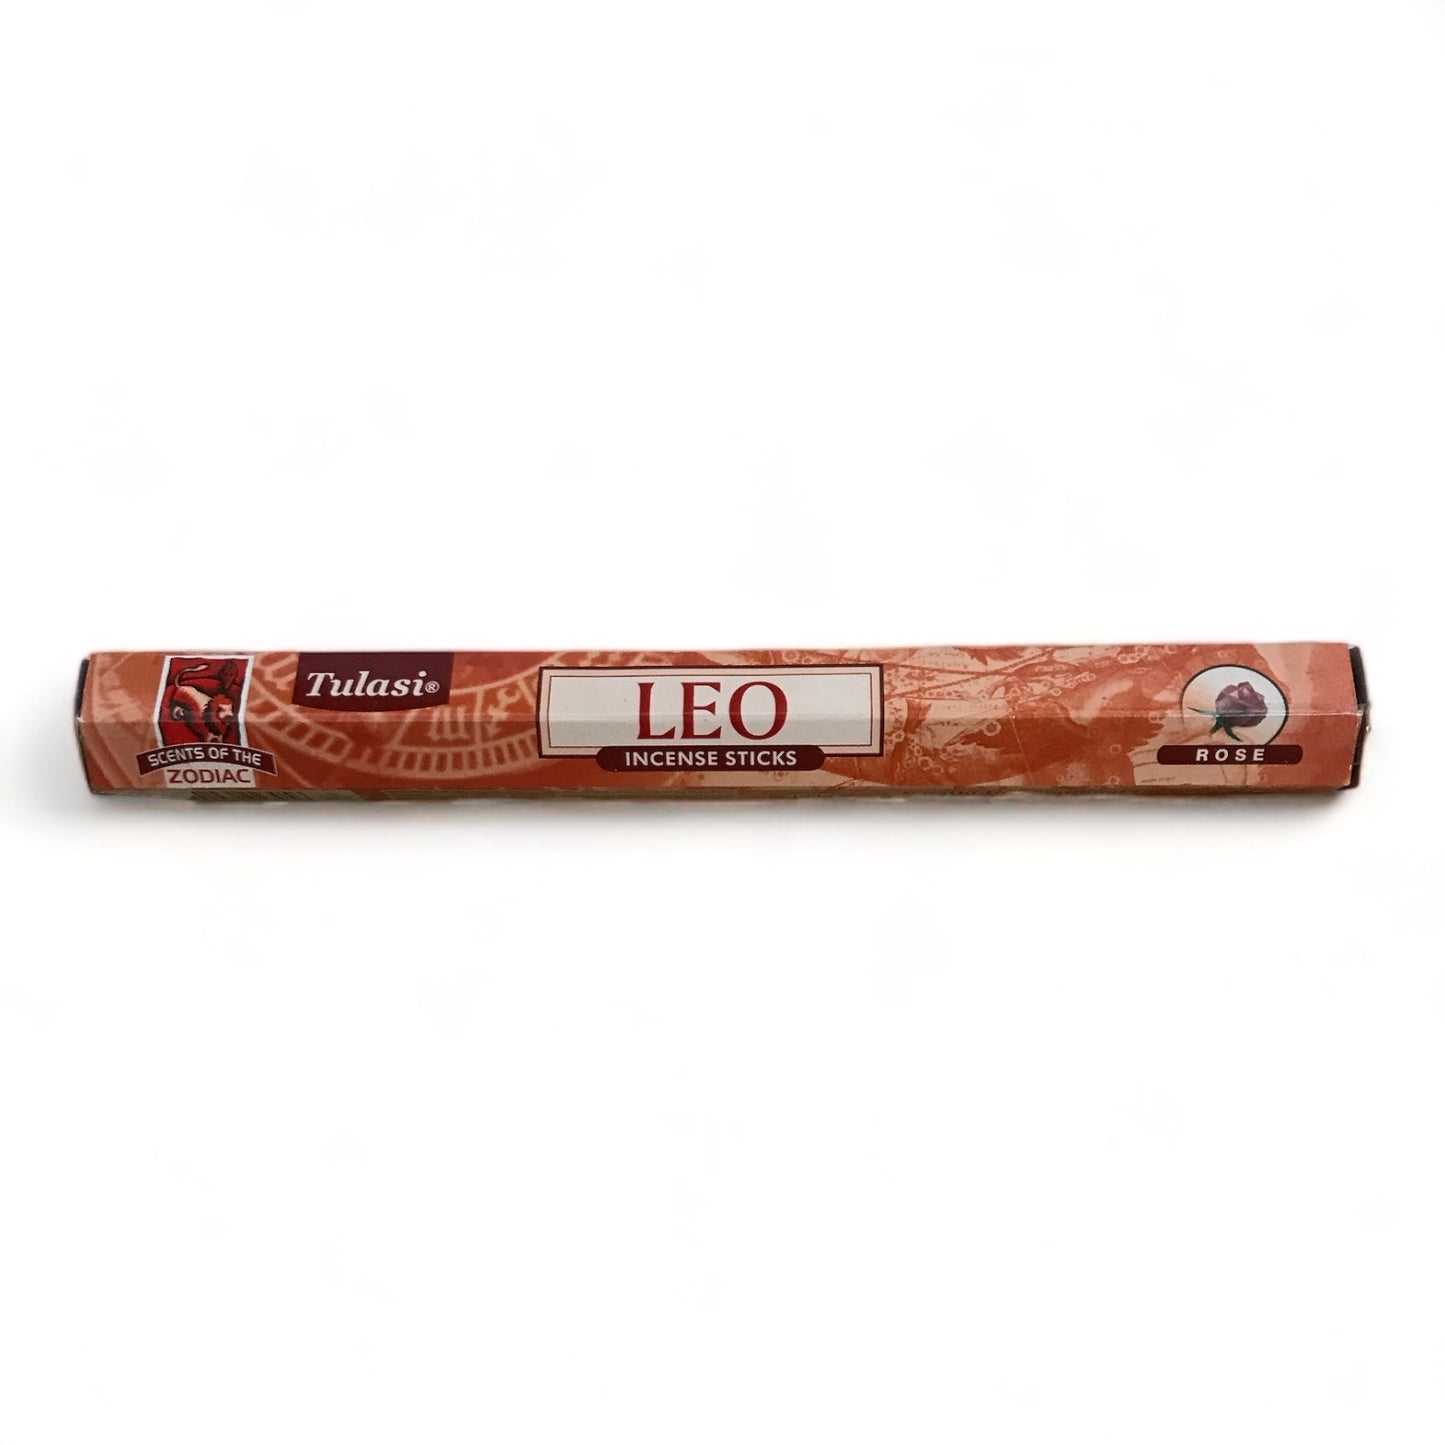 Leo Incense Sticks - Tulasi